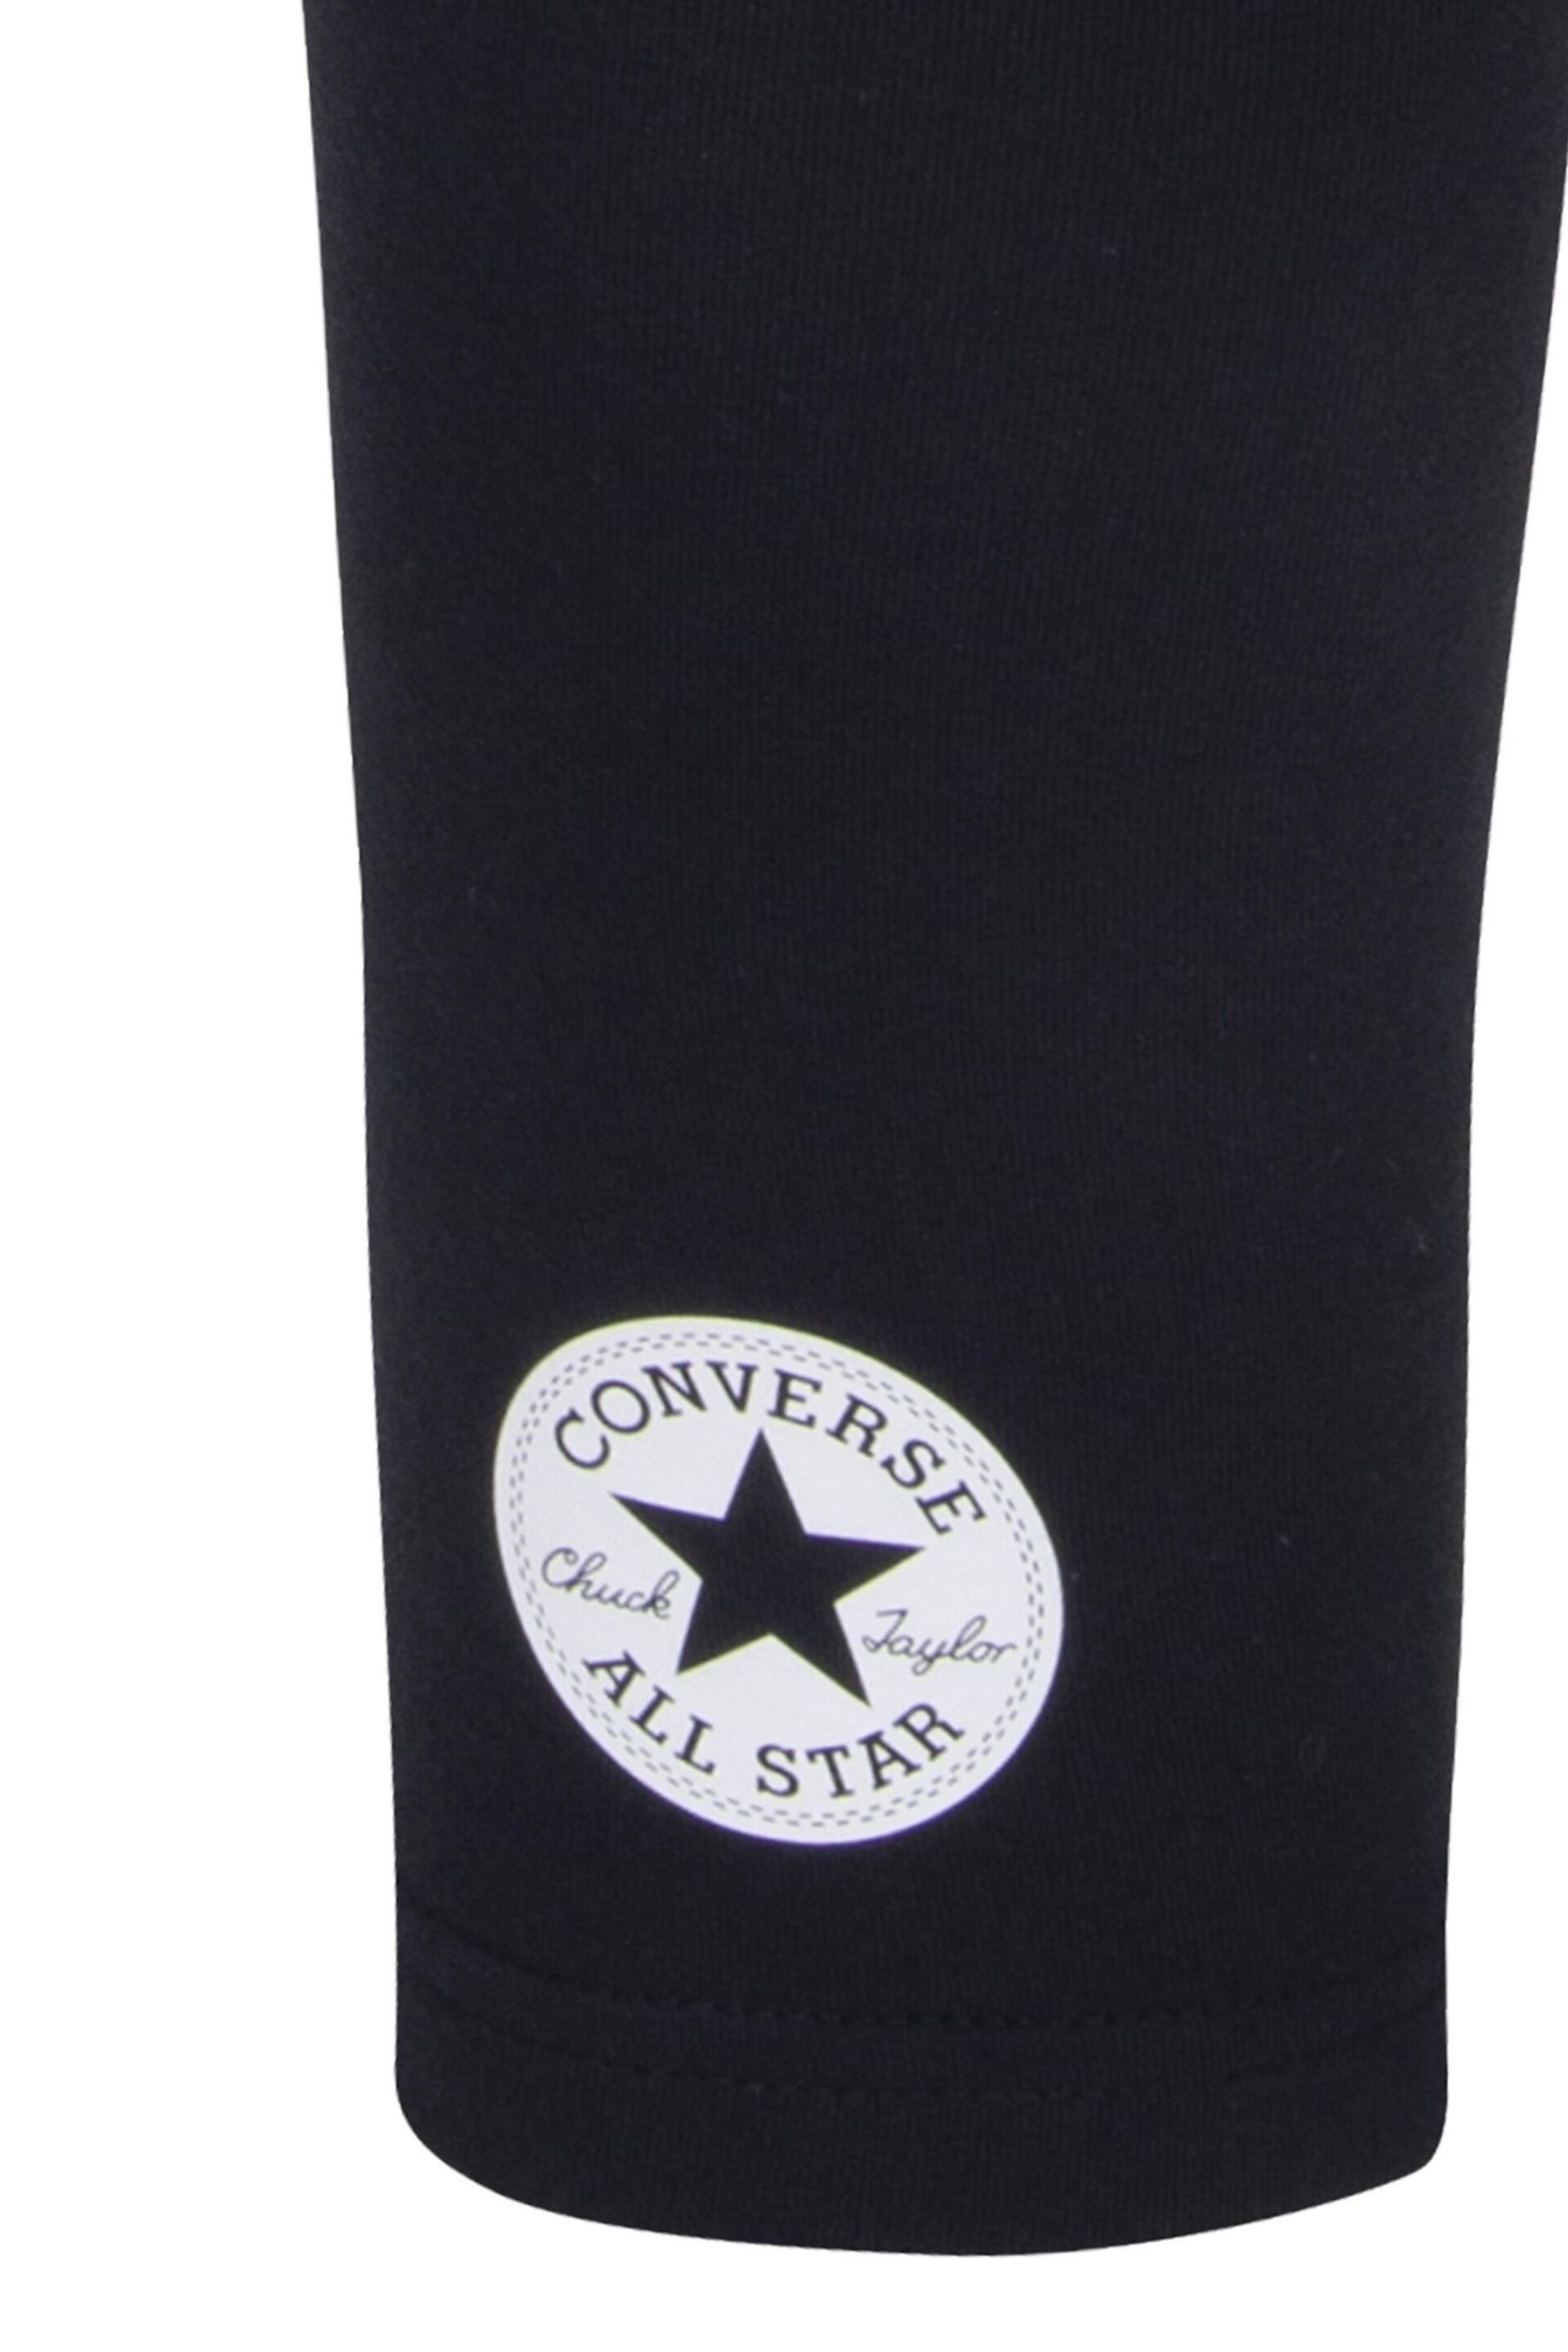 Converse Black Leggings - Image 6 of 11